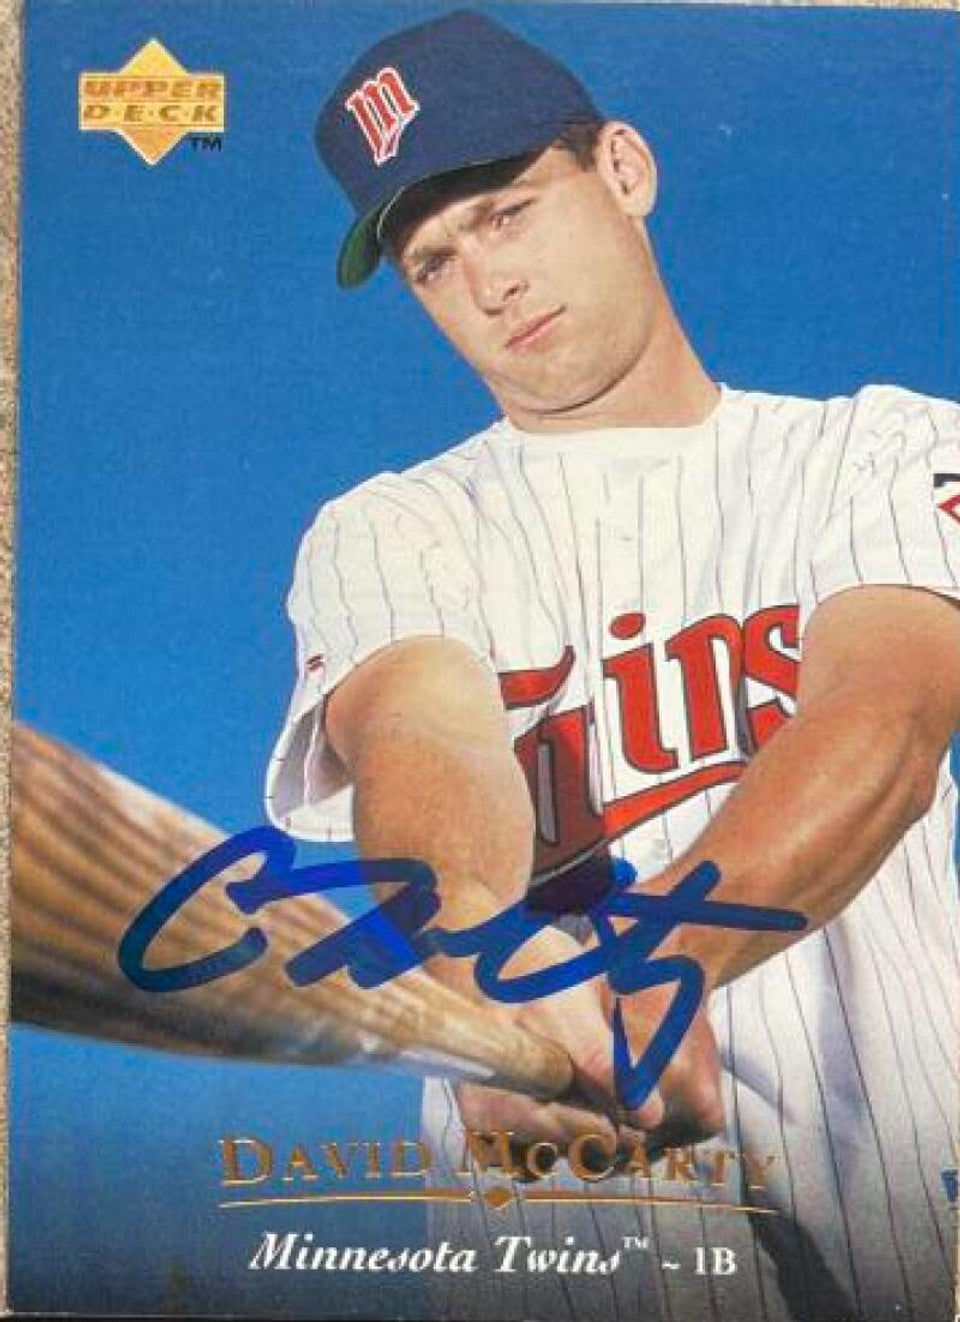 David McCarty Signed 1995 Upper Deck Baseball Card - Minnesota Twins